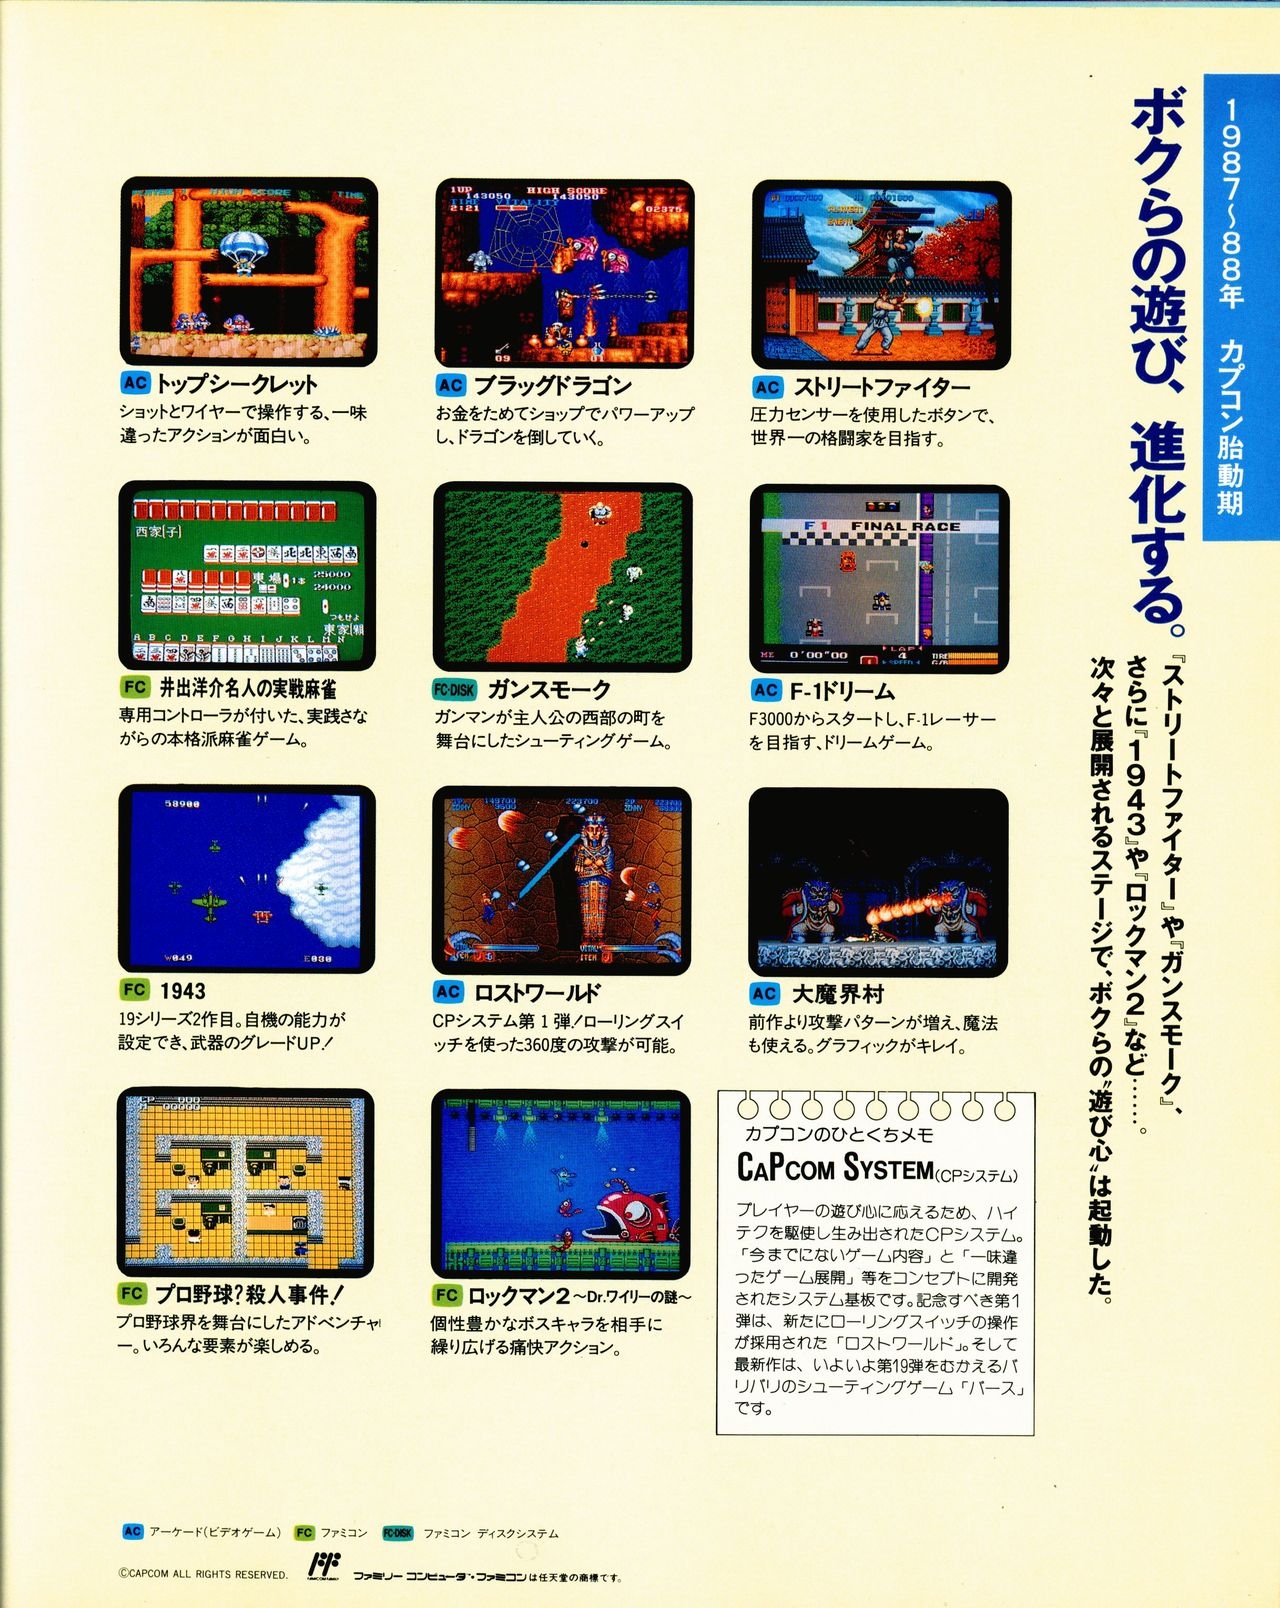 Street Fighter II Dash - Gamest special issue 77 159